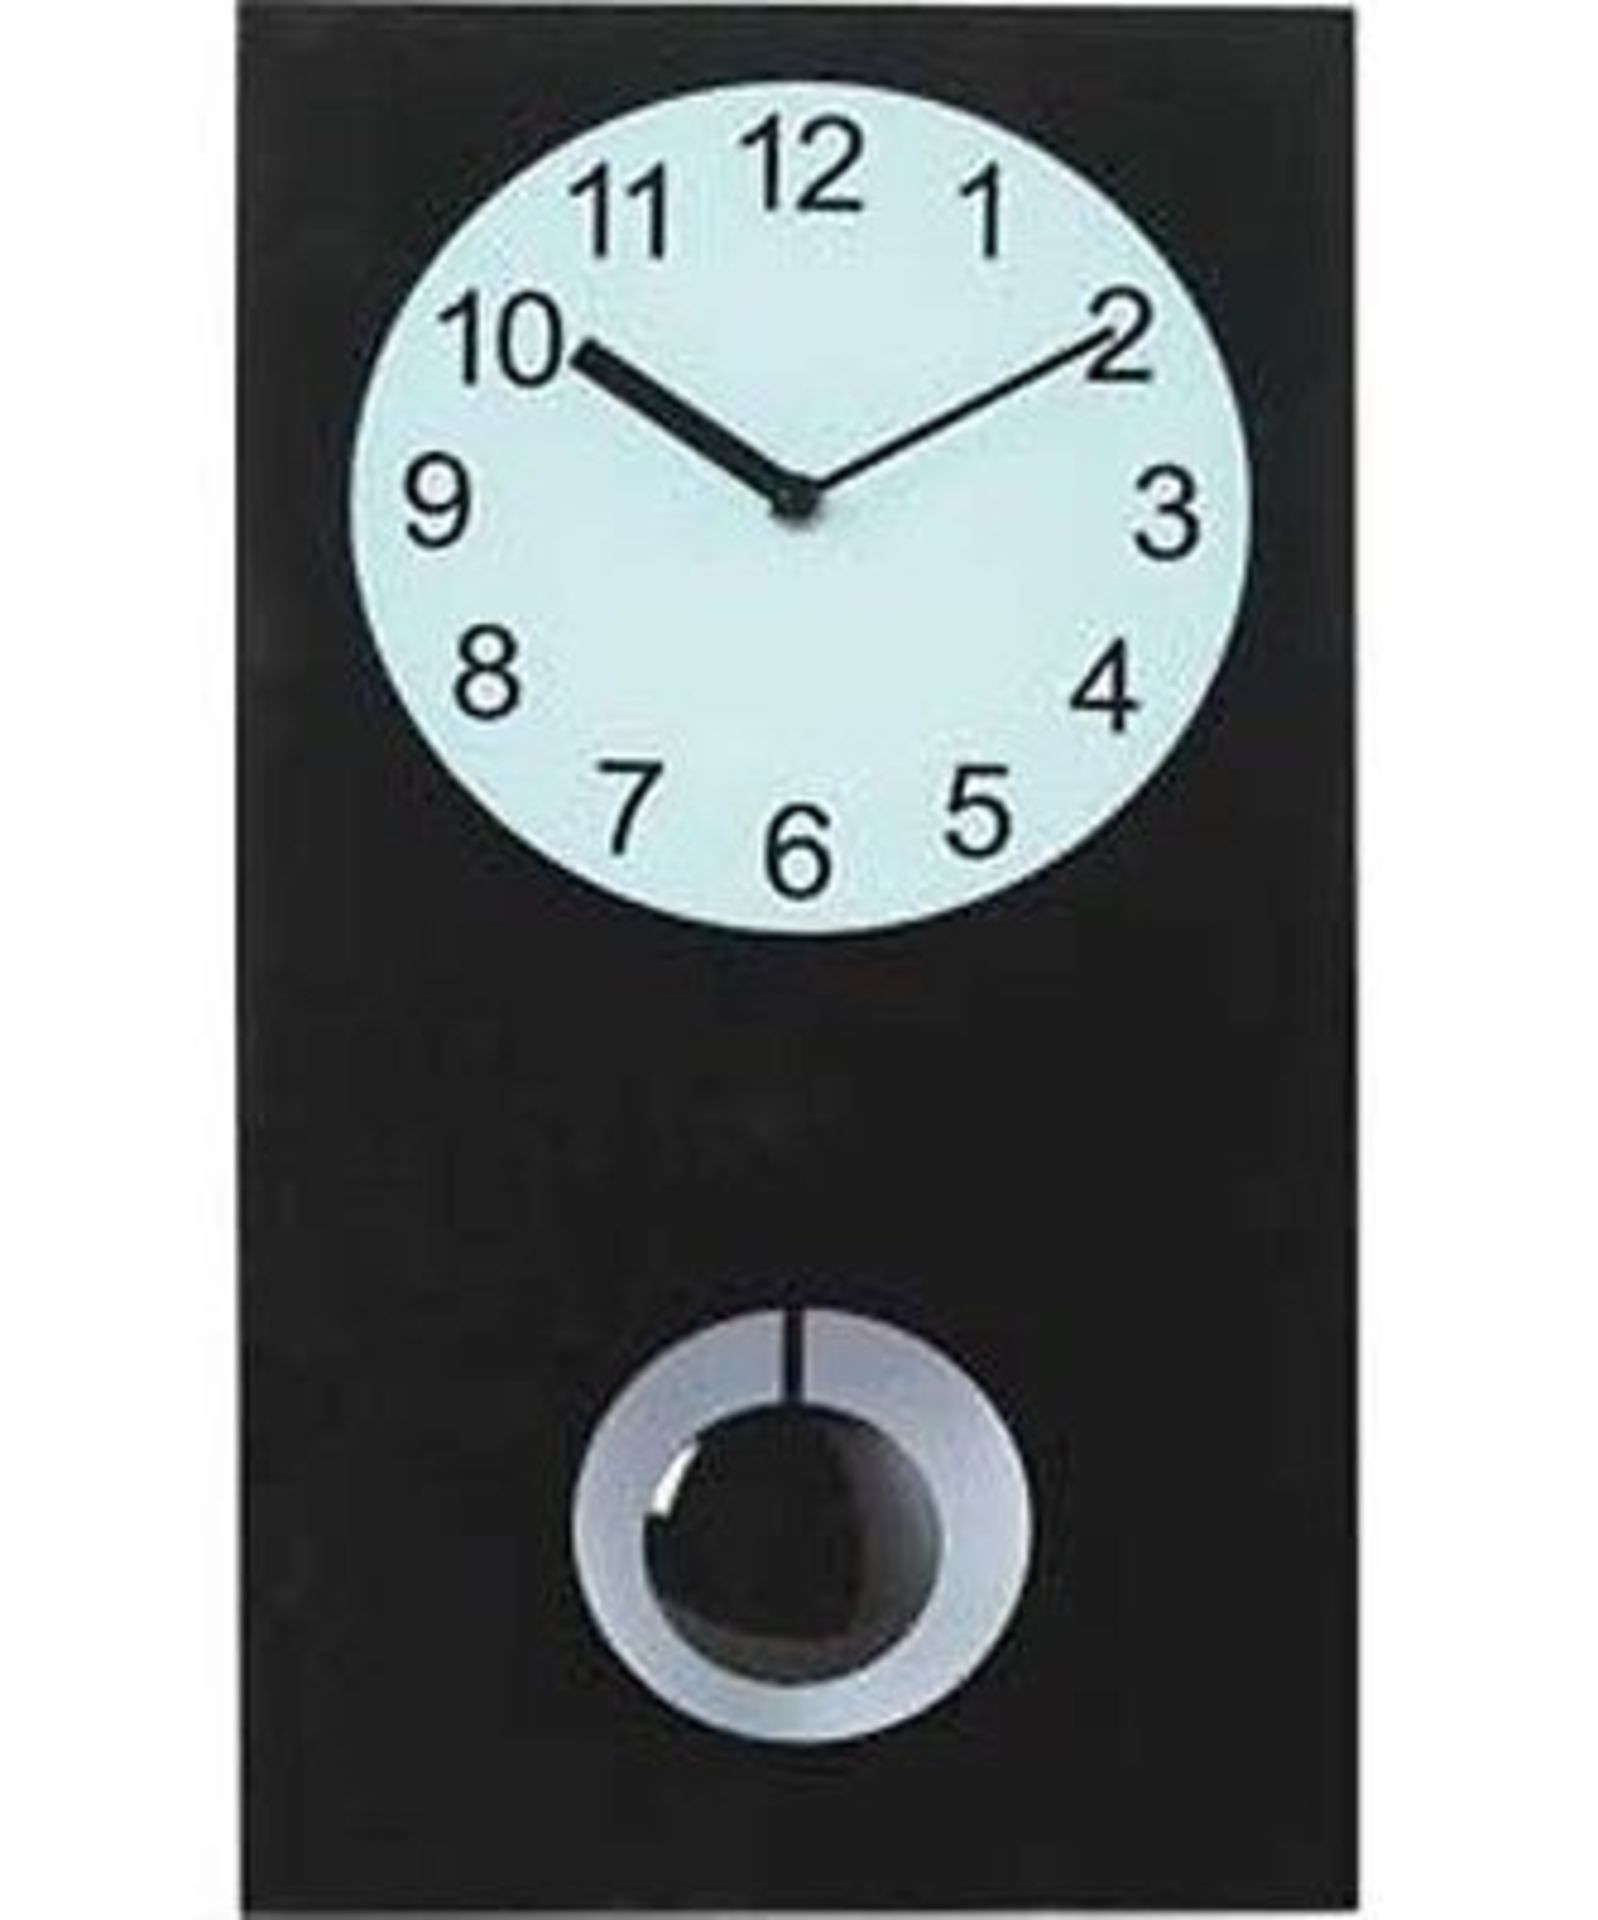 Brand New Black Gloss Pendulum Clock 45 X 25cm Argos Price £30 X 2 YOUR BID PRICE TO BE MULTIPLIED